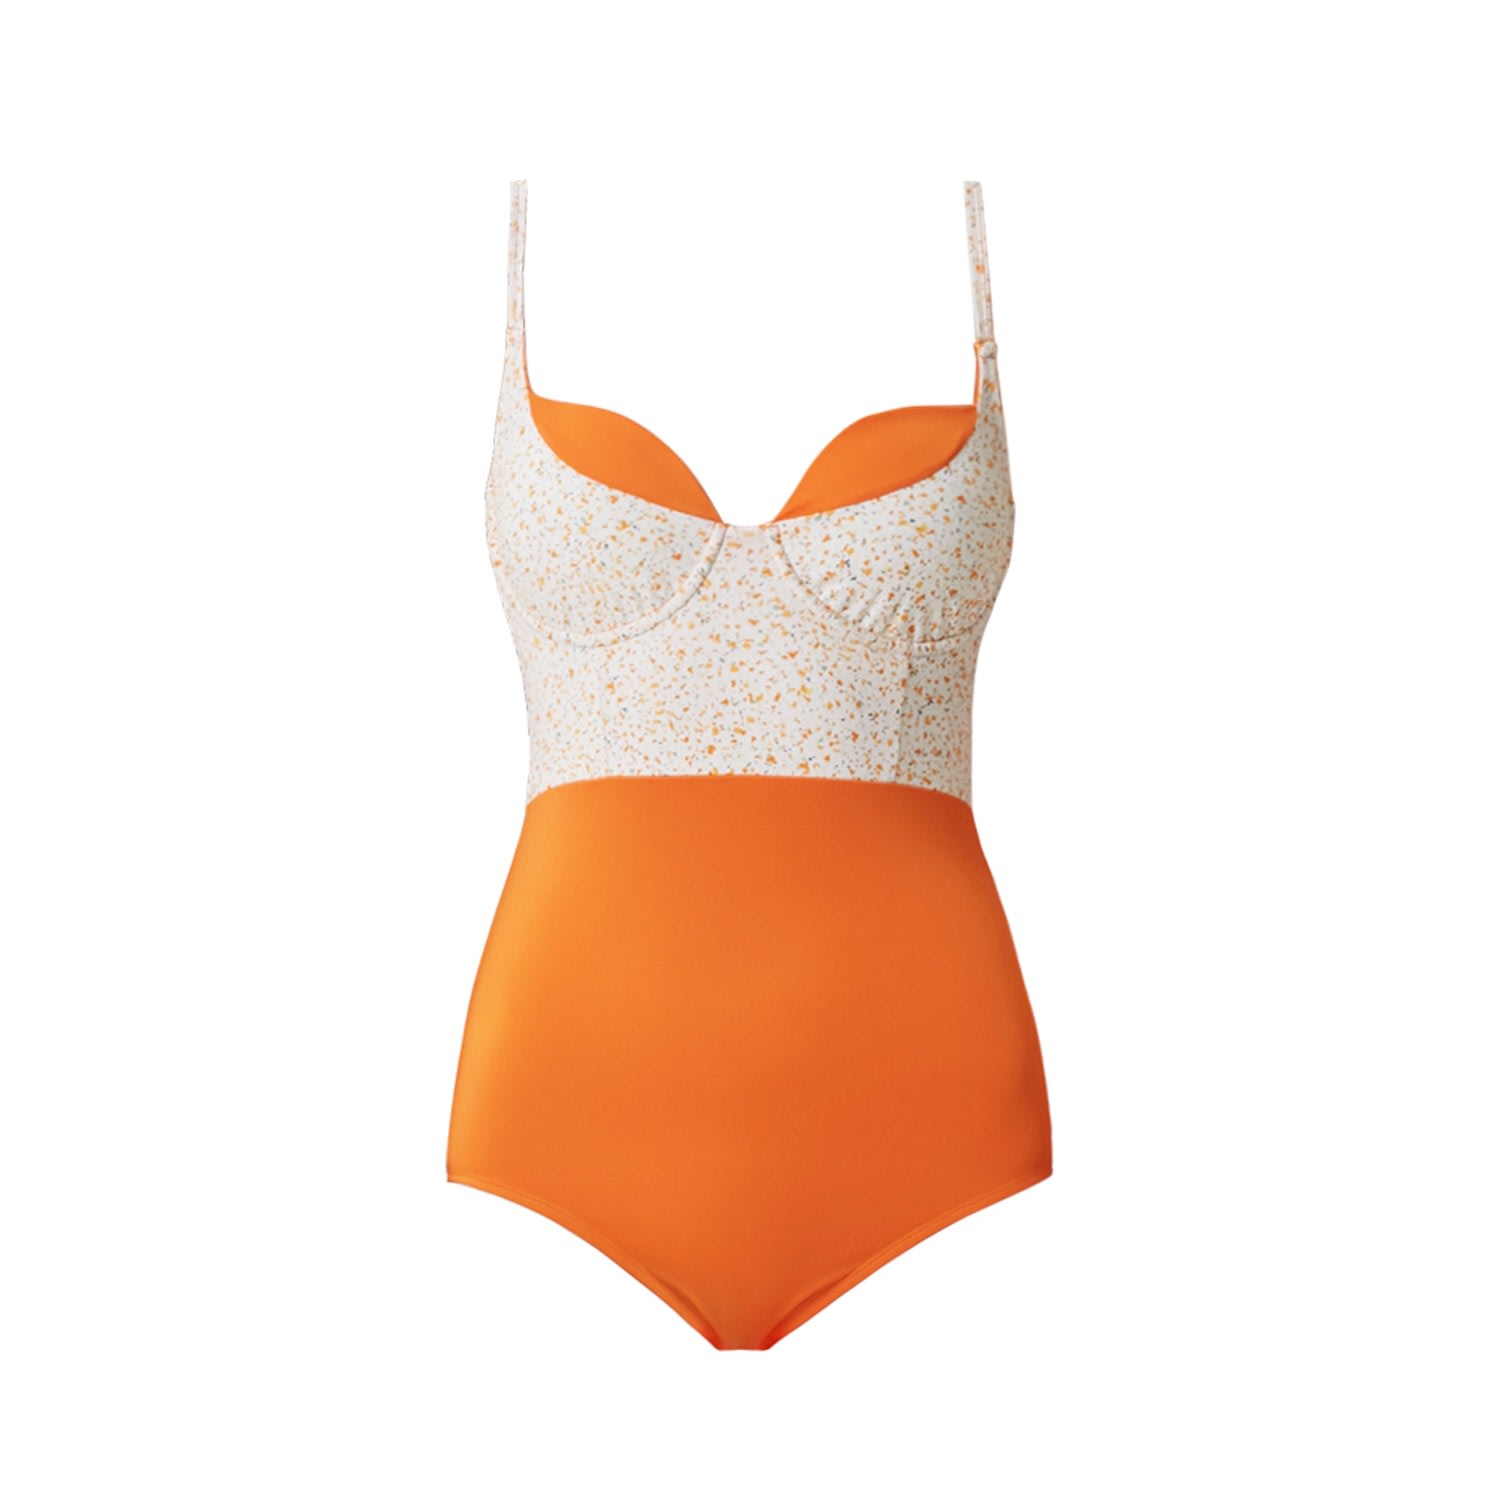 Women's Bustier Style Wired One Piece Swimwear - Orangeade Recipe Extra Small QUA VINO